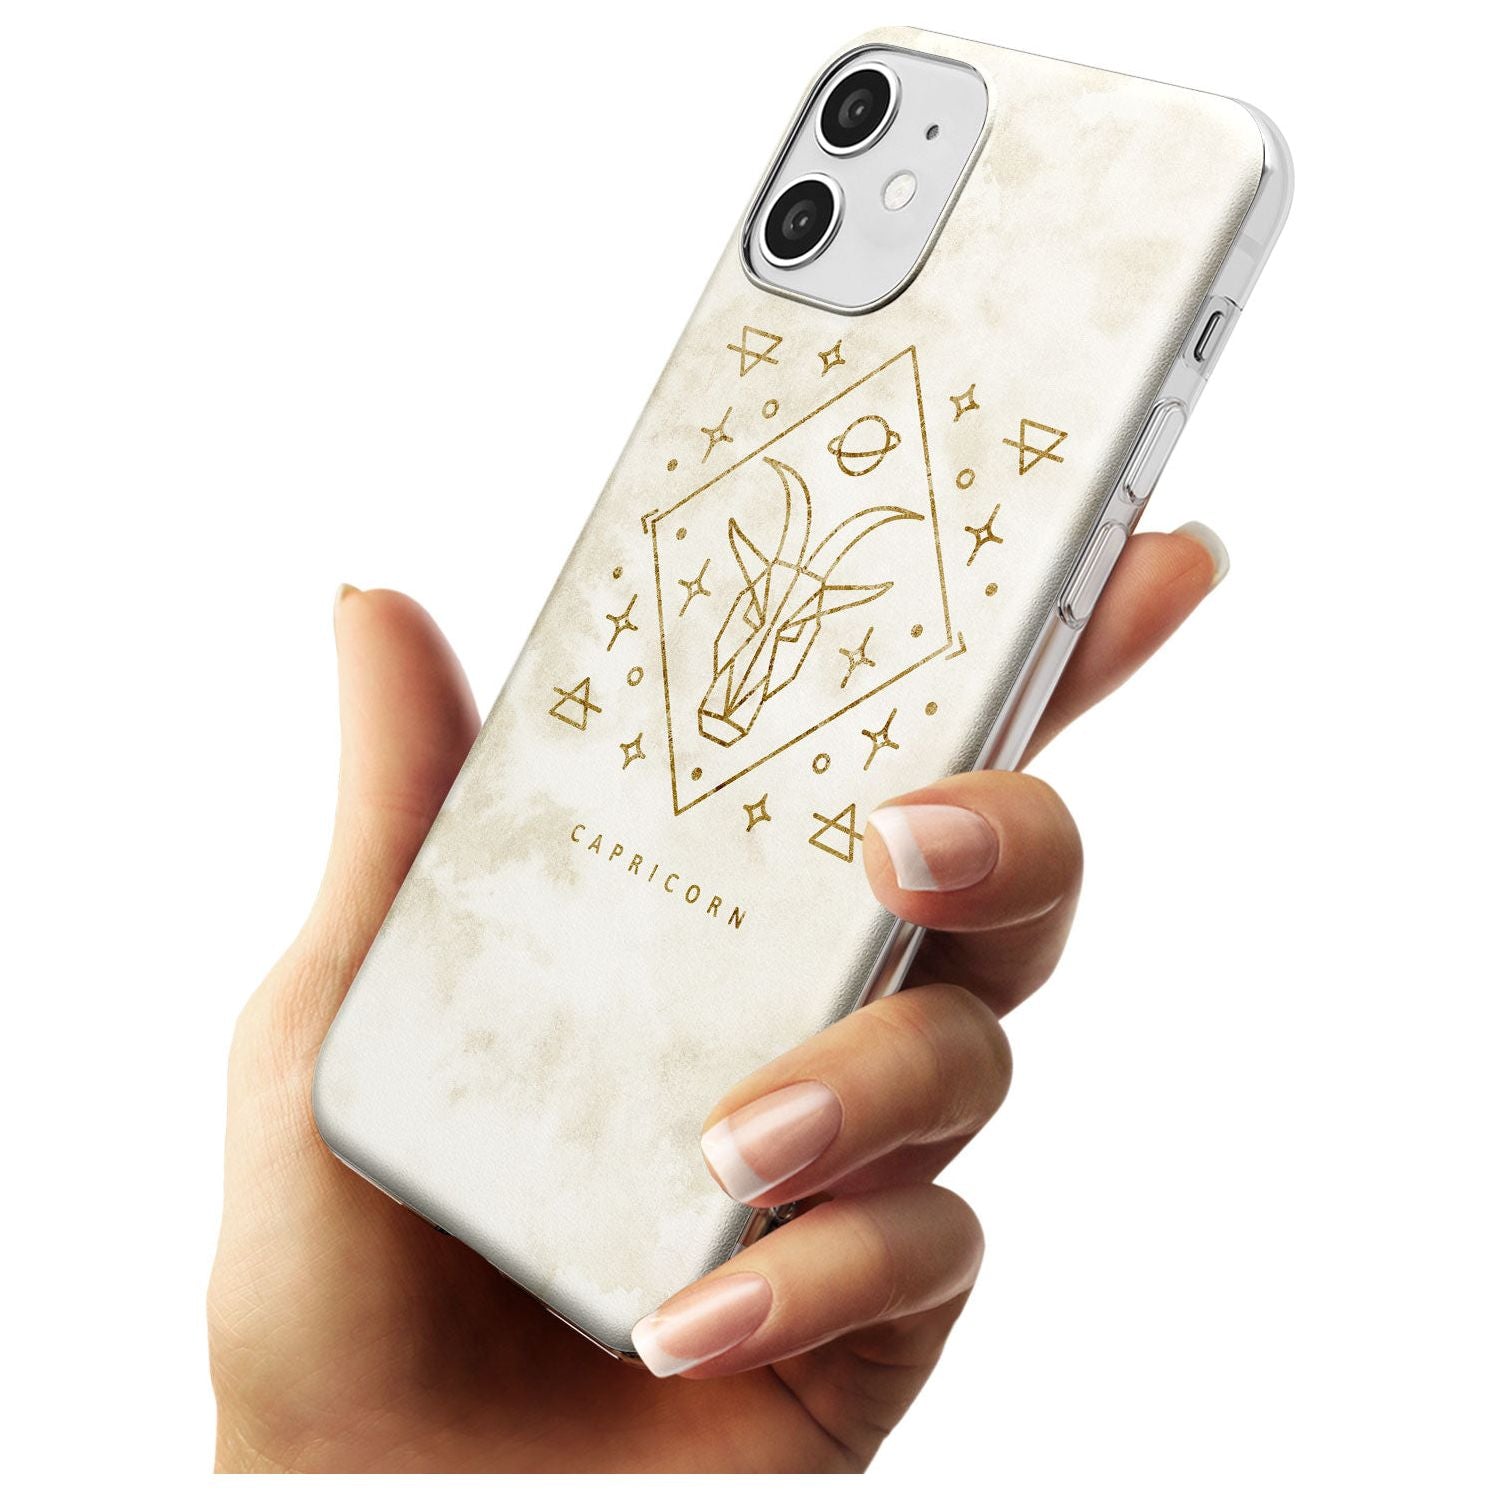 Capricorn Emblem - Solid Gold Marbled Design Slim TPU Phone Case for iPhone 11